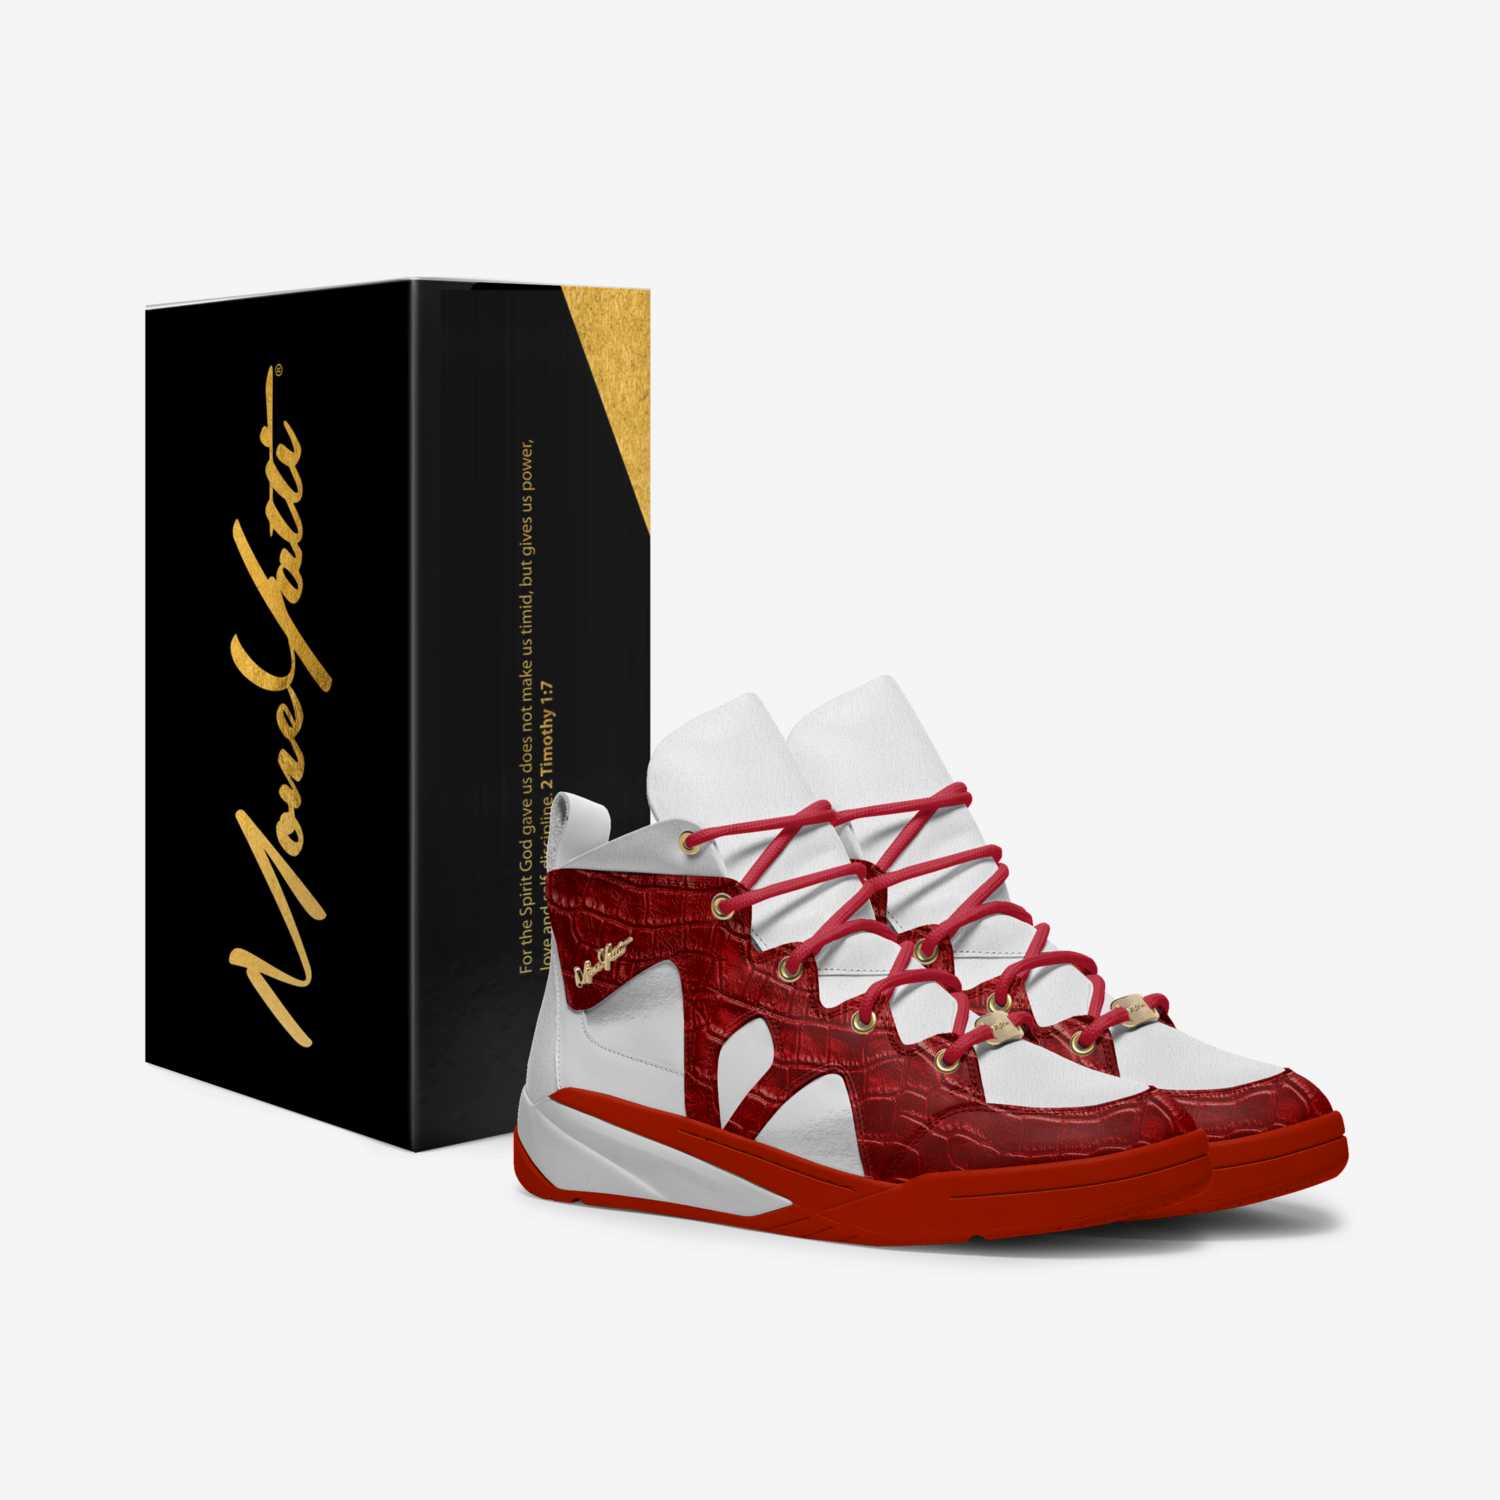 MONEYATTI TAKE OFF 019 custom made in Italy shoes by Moneyatti Brand | Box view